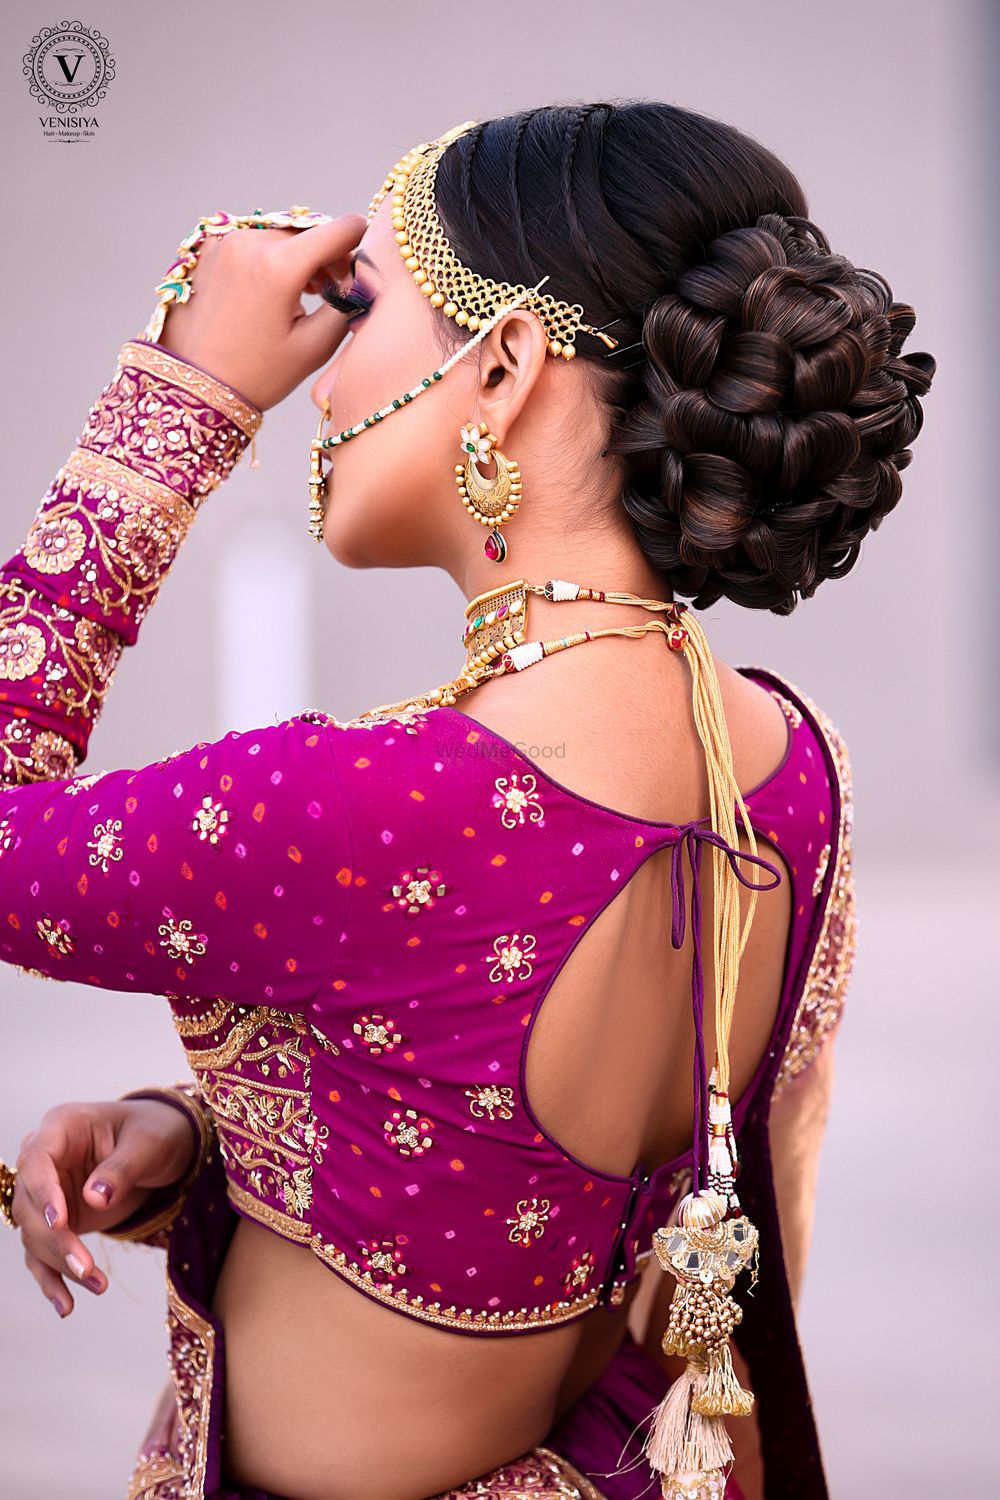 Photo From Bridal Shoot - By Venisiya Hair n Beauty Care